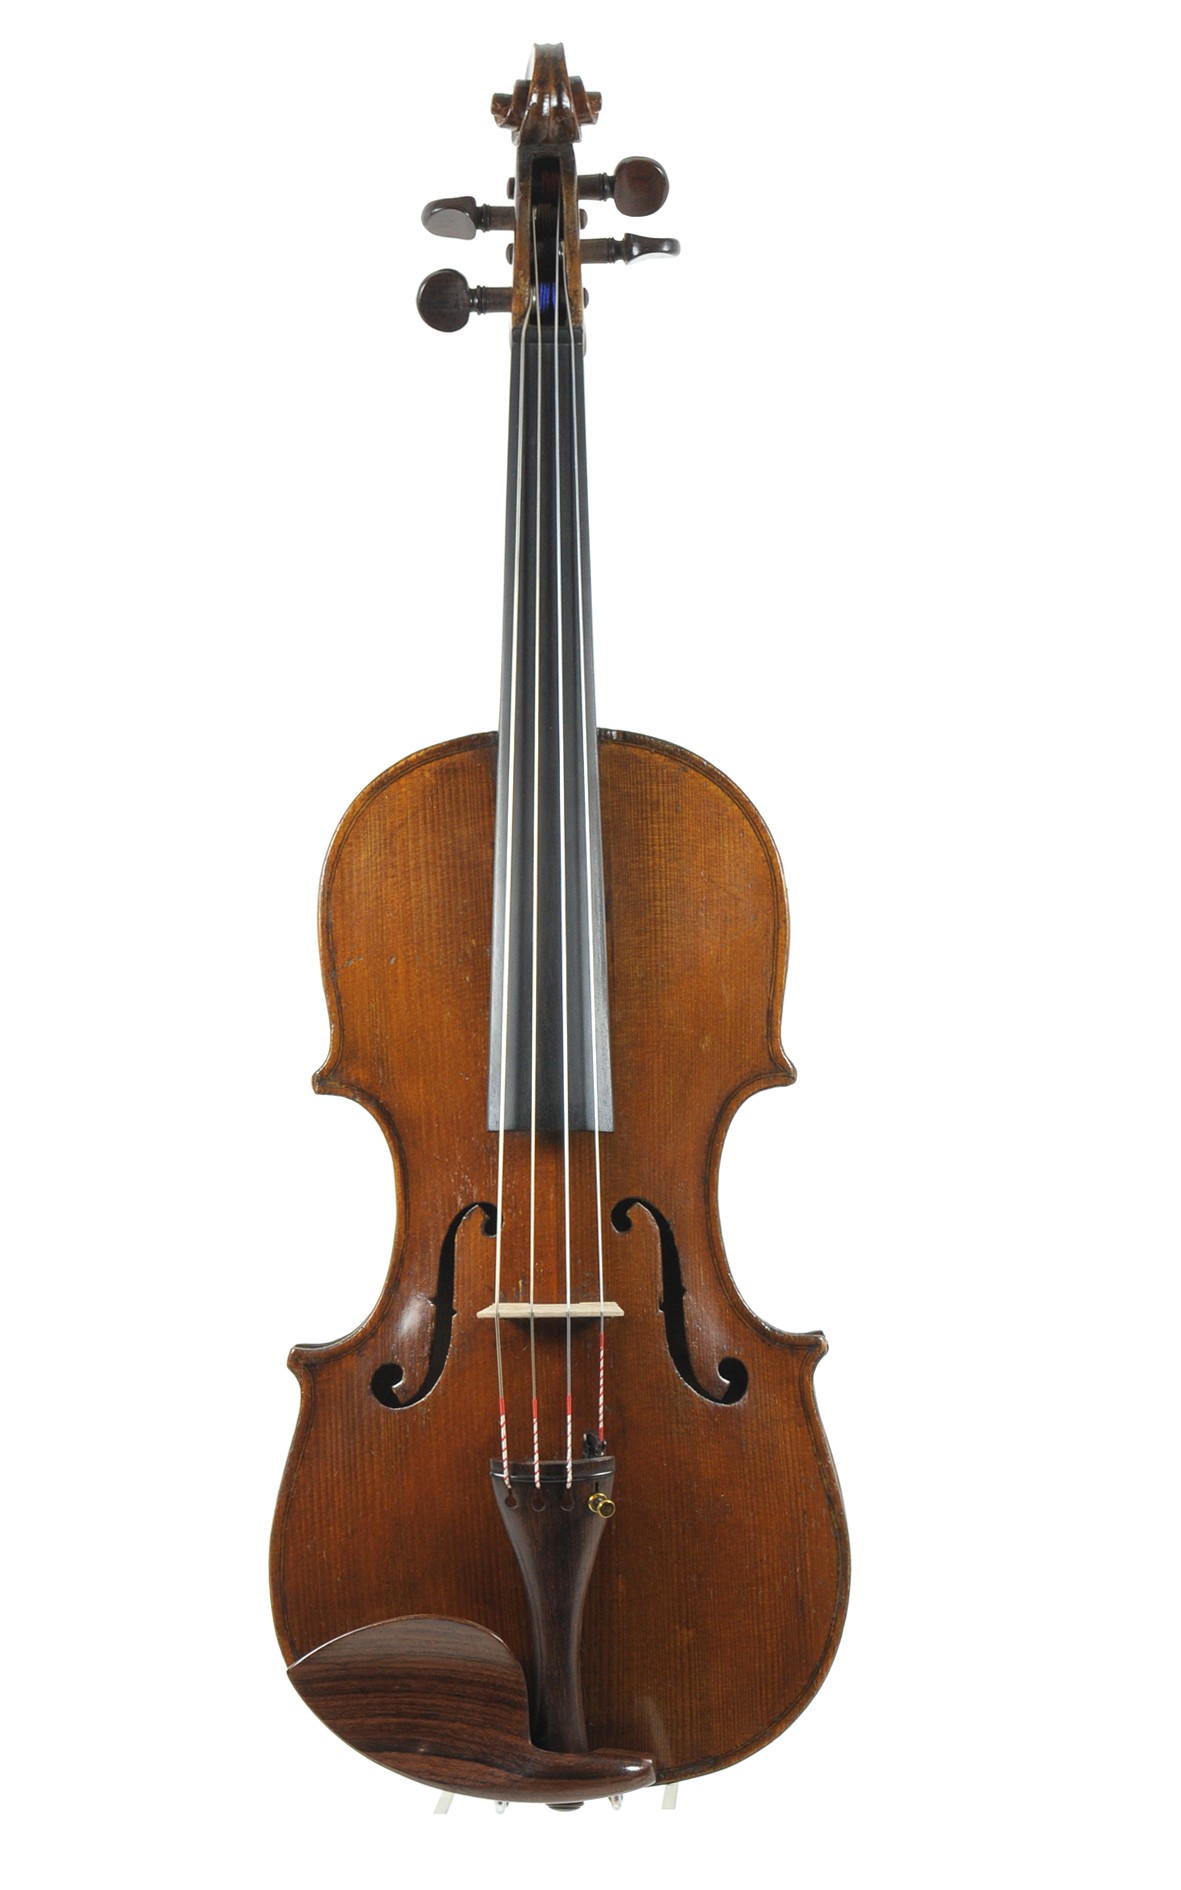 Hopf 3/4 viola from Saxony, approx. 1850 - top